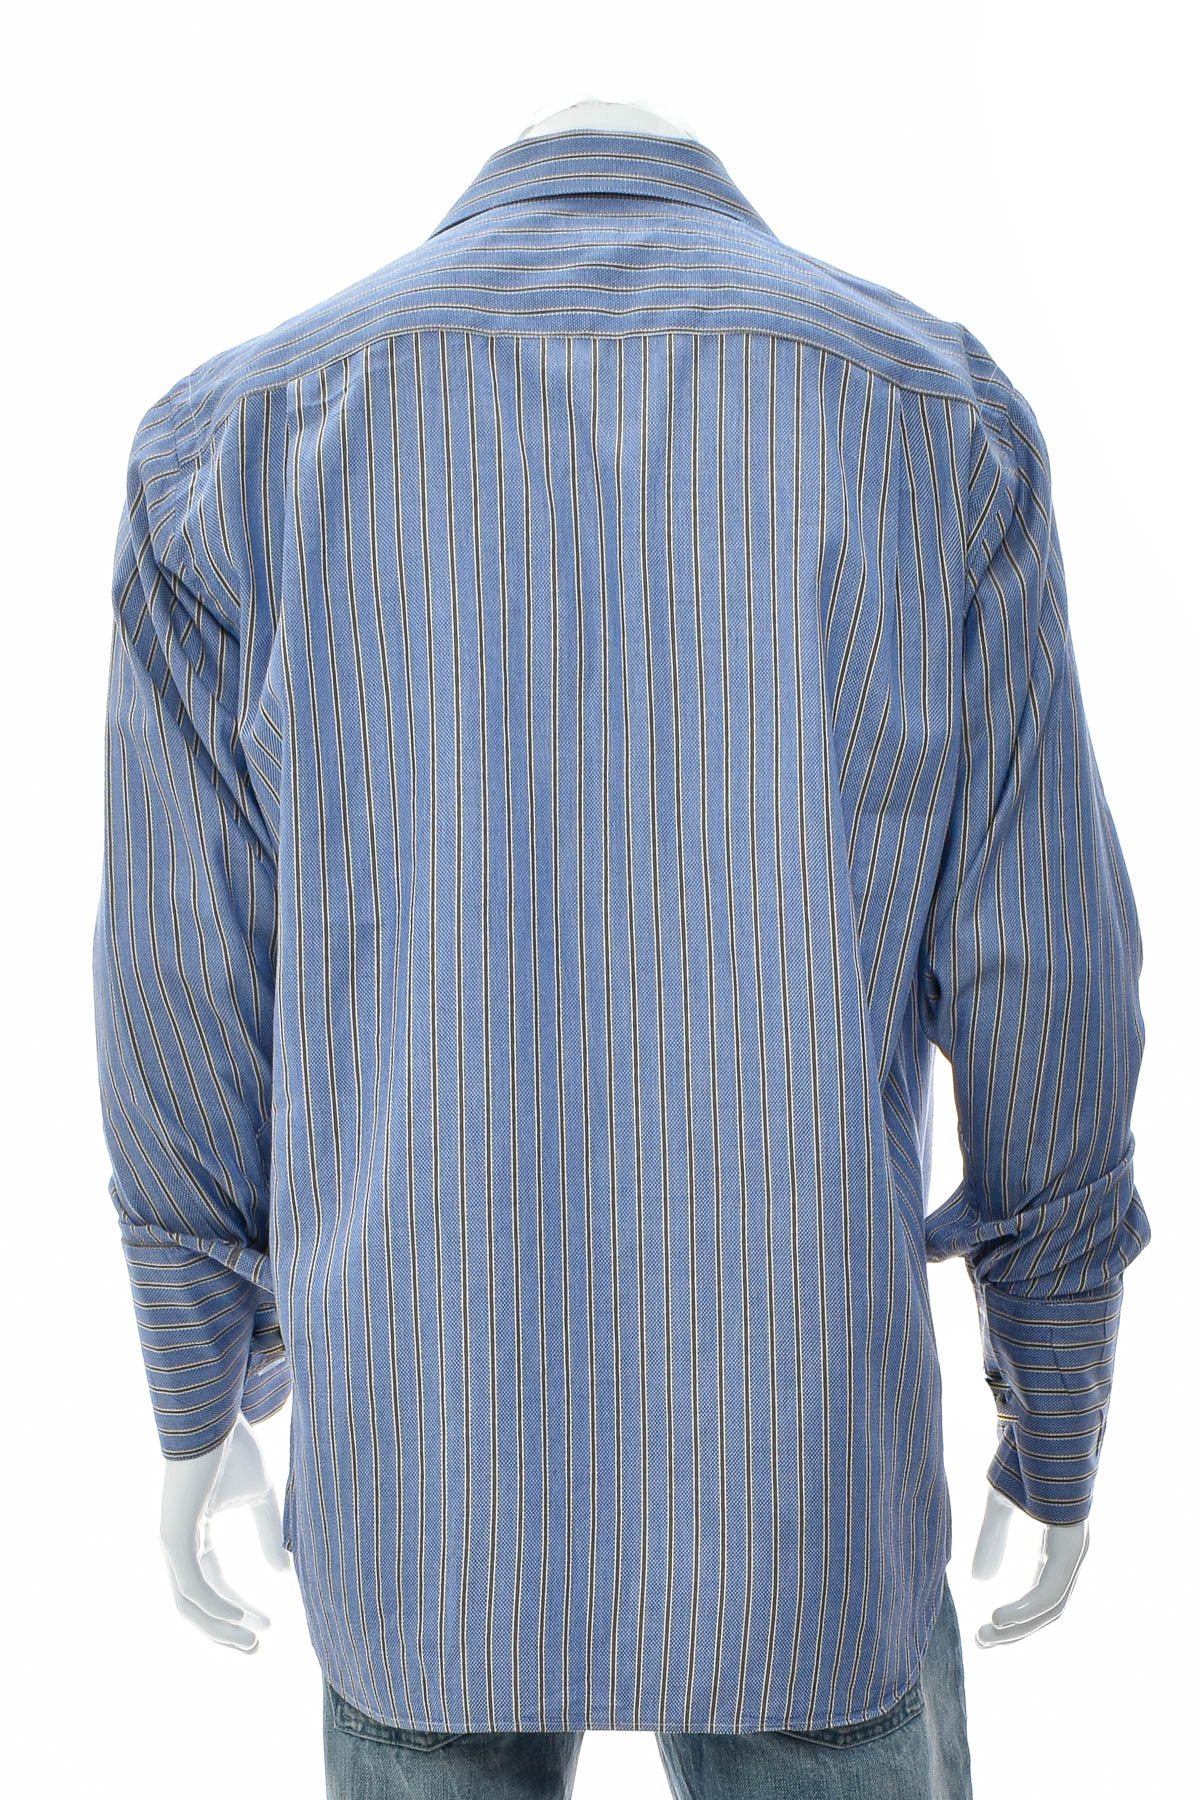 Men's shirt - Paul Fredrick - 1